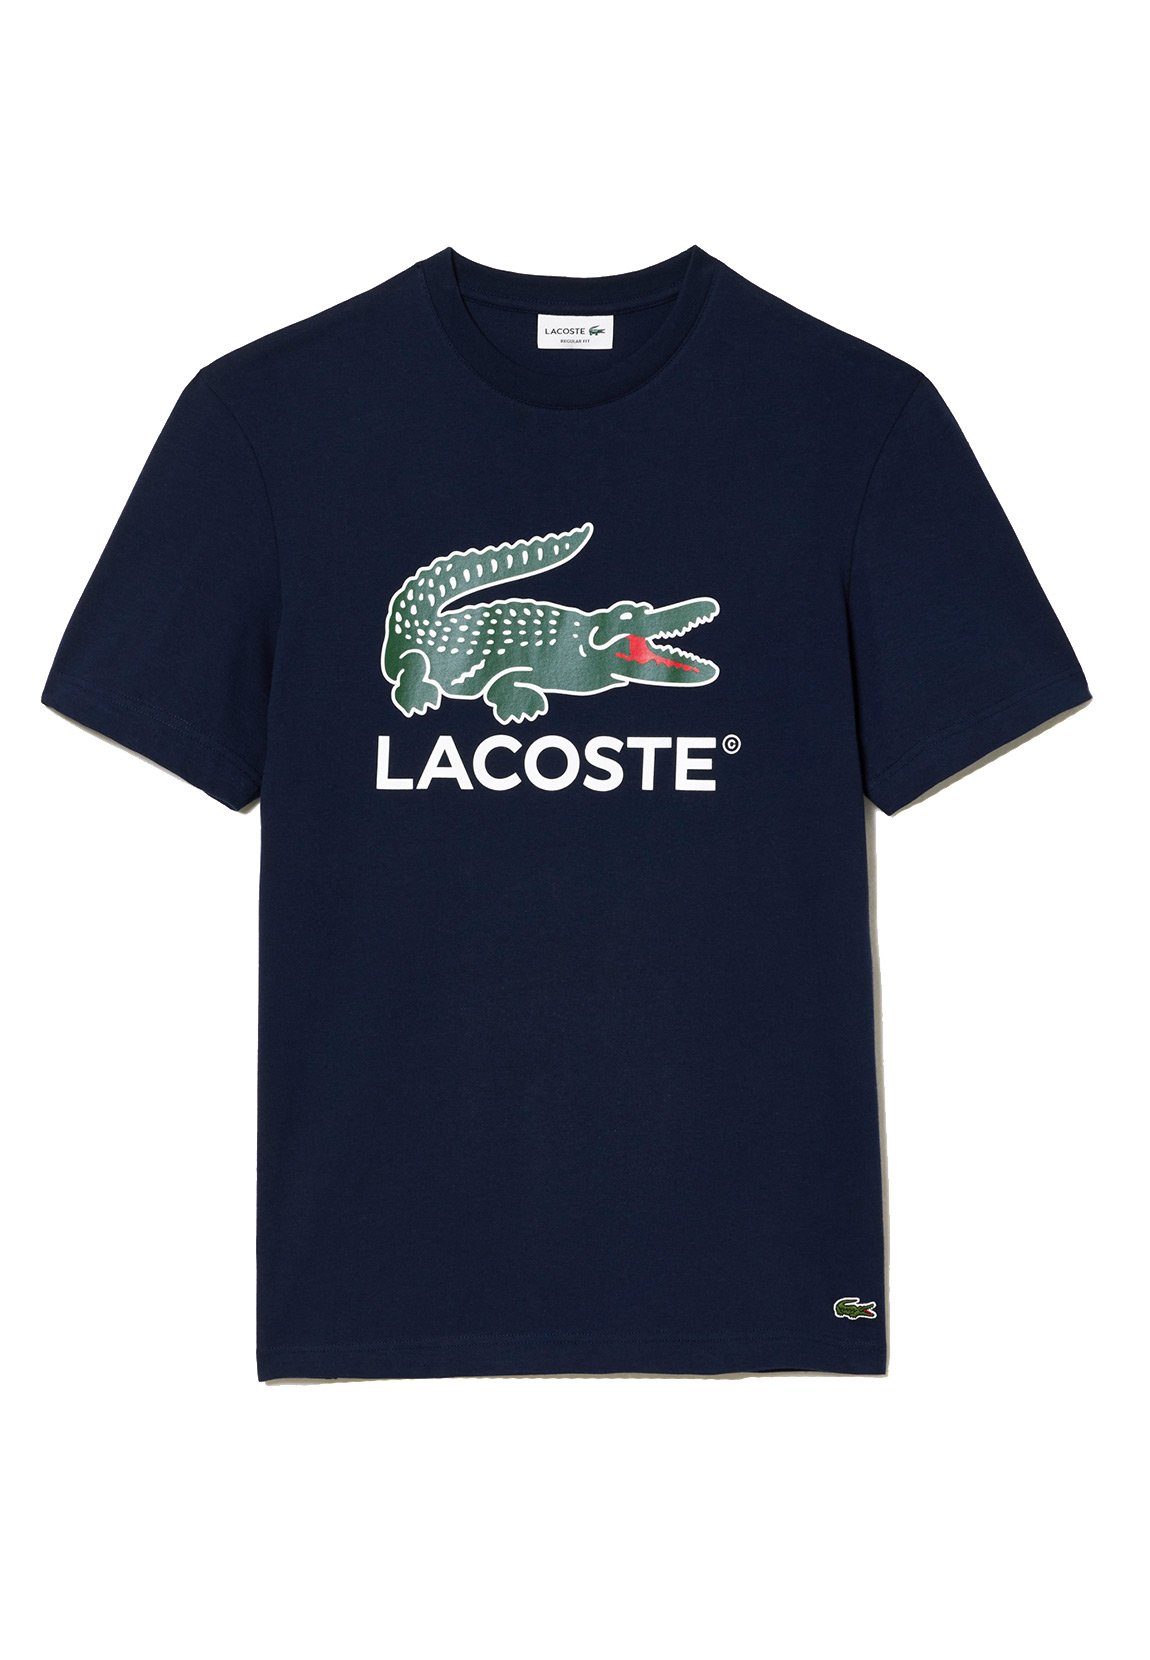 Lacoste T-Shirt Lacoste Herren TEE-SHIRT TH1285 166 Marine Dunkelblau navy blue | T-Shirts